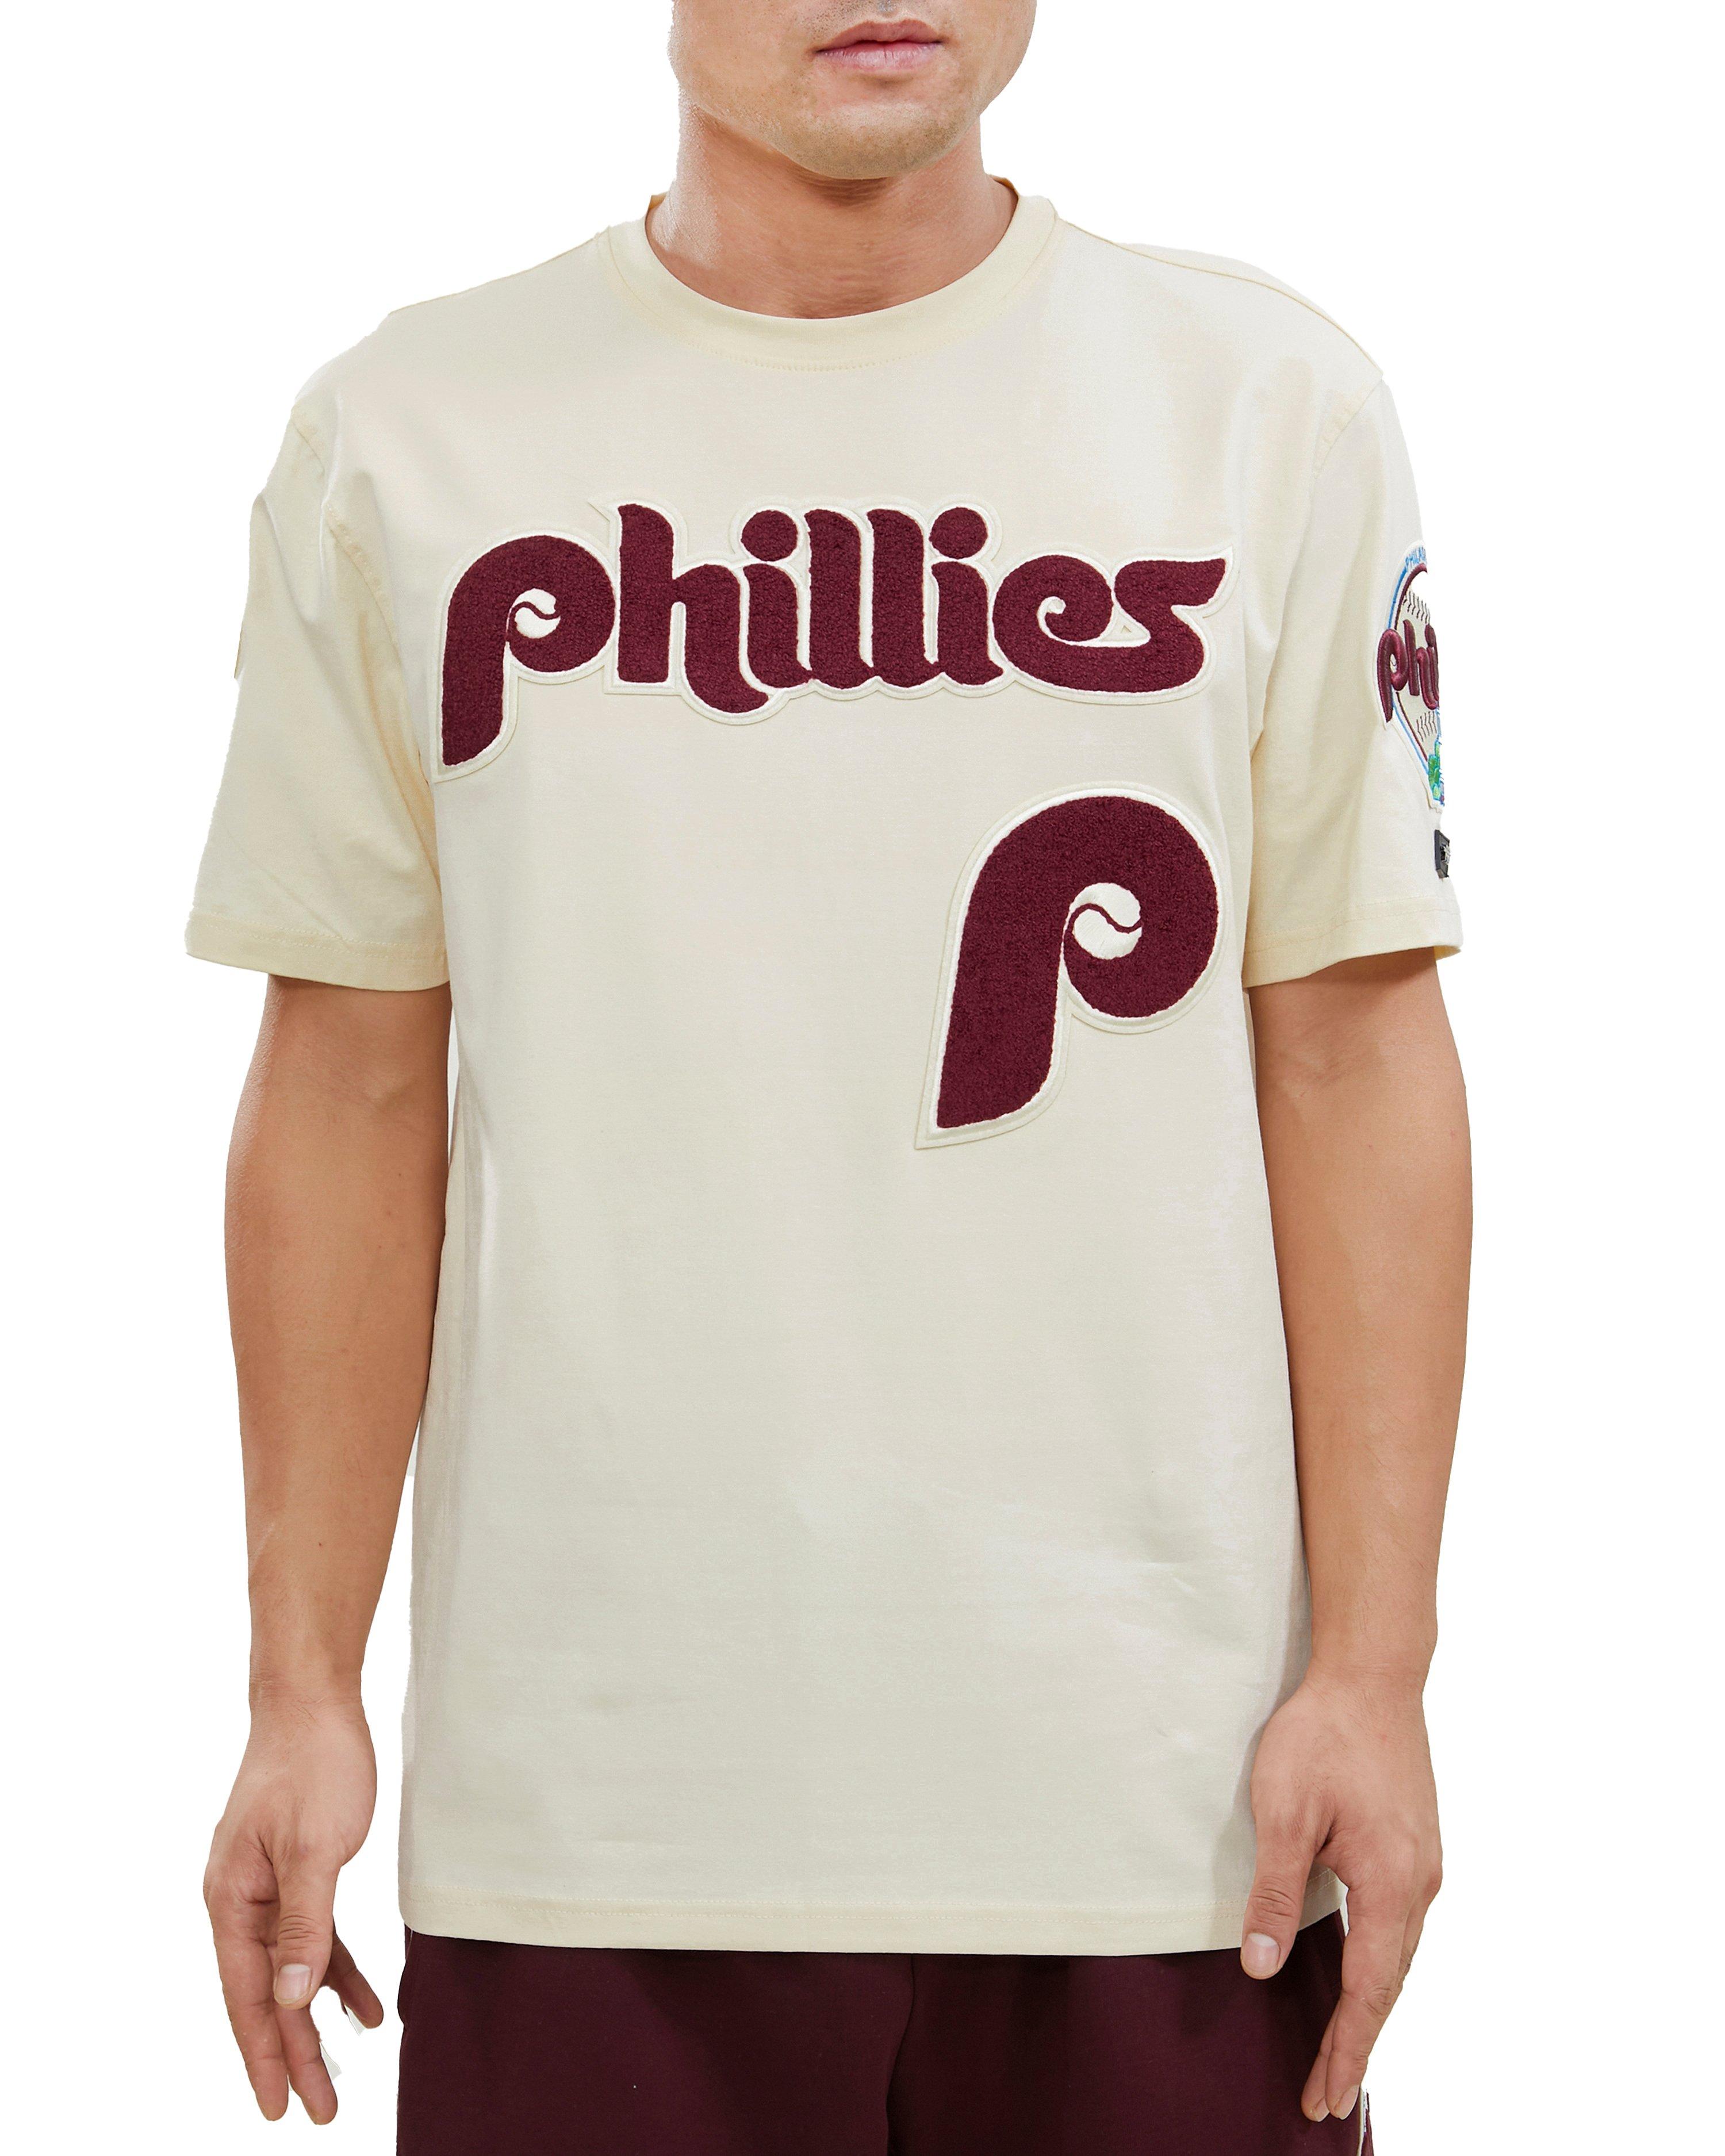 Mens Philadelphia Phillies Apparel, Phillies Men's Jerseys, Clothing